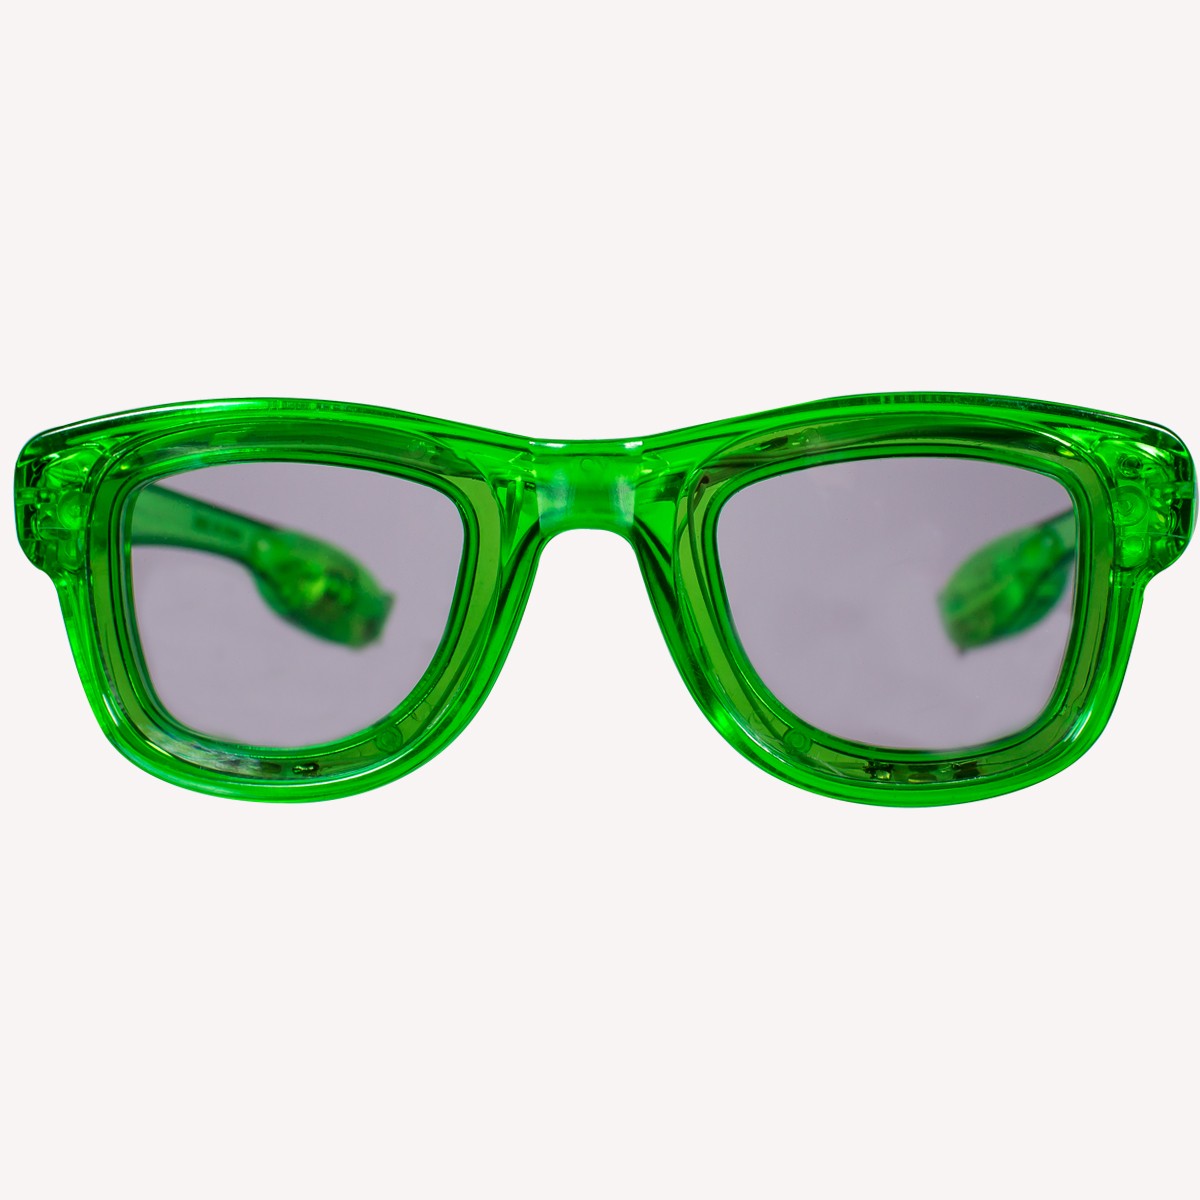 Green LED Classic Retro Sunglasses with Sound Option